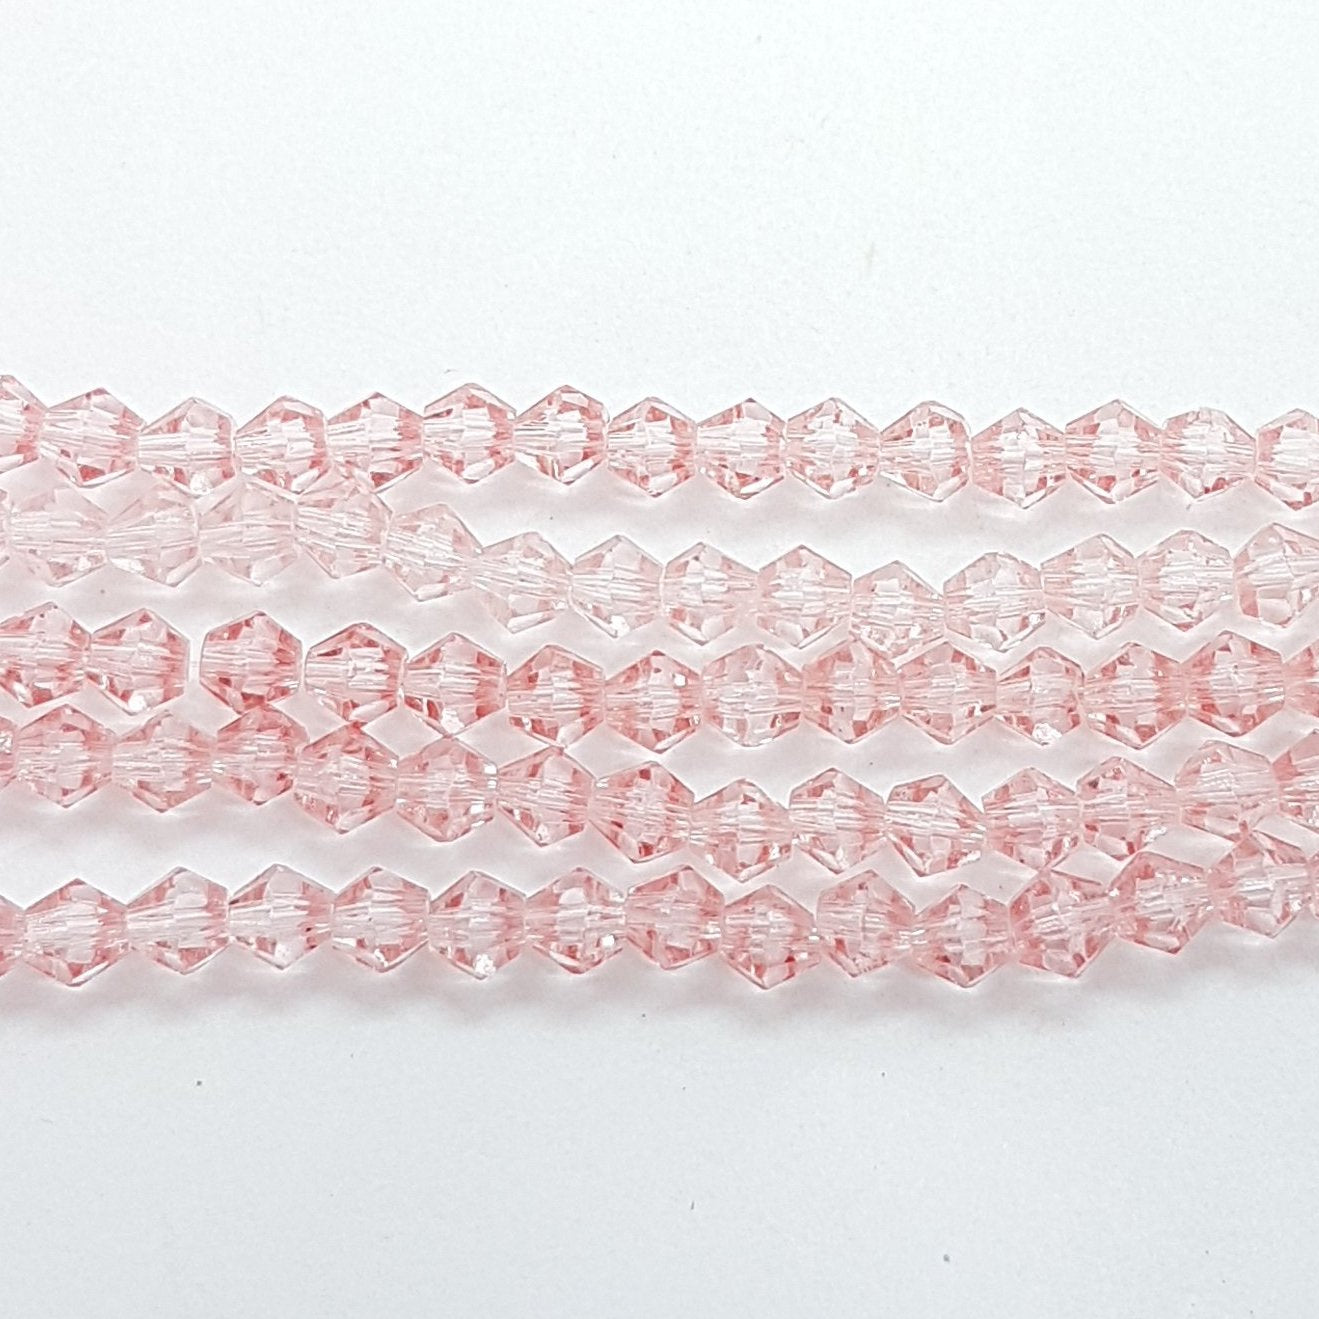 4mm Rose Pink Crystal Glass Bicones